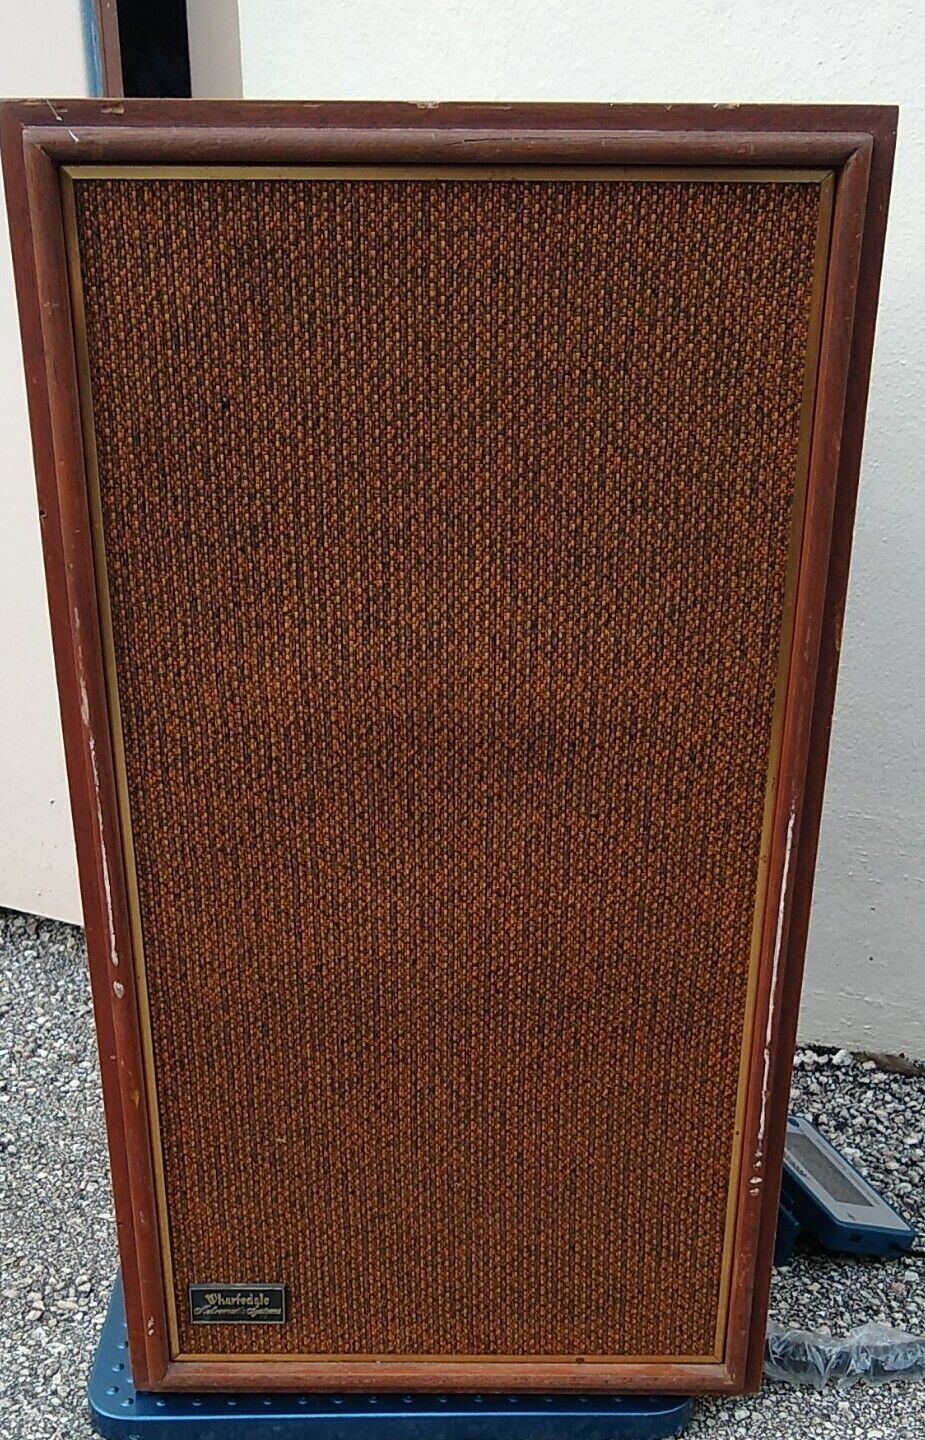 Vintage Mid Century Wharfedale W45 Speakers- Local pickup preferred